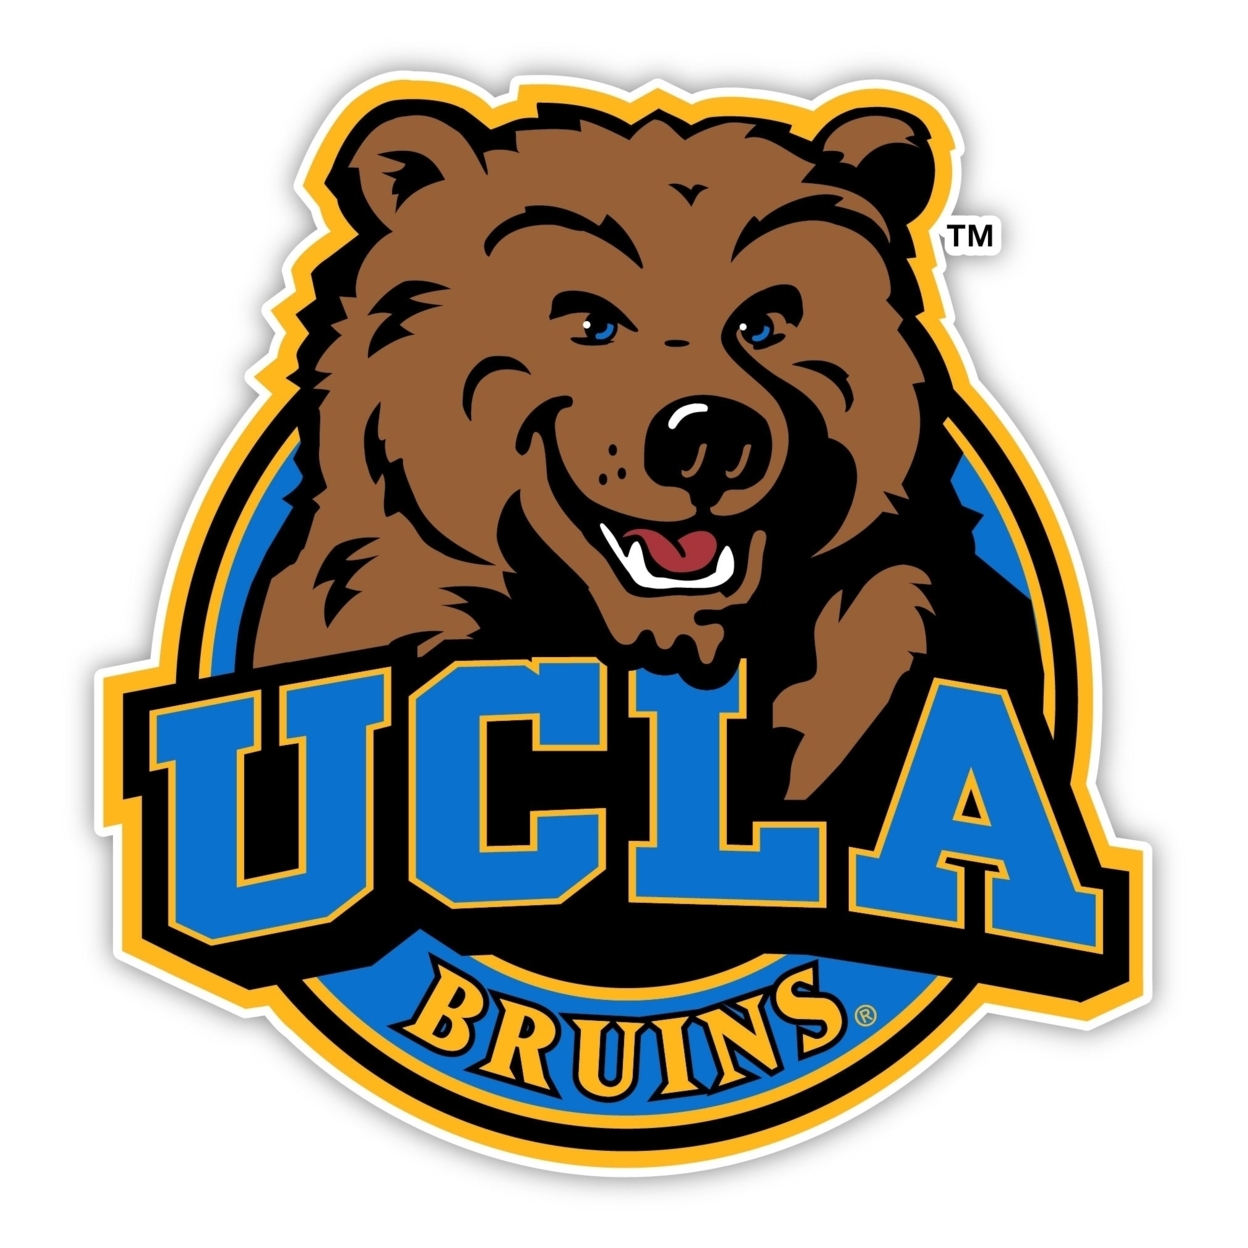 UCLA Bruins 2 Inch Vinyl Mascot Decal Sticker - 1, 12-Inch